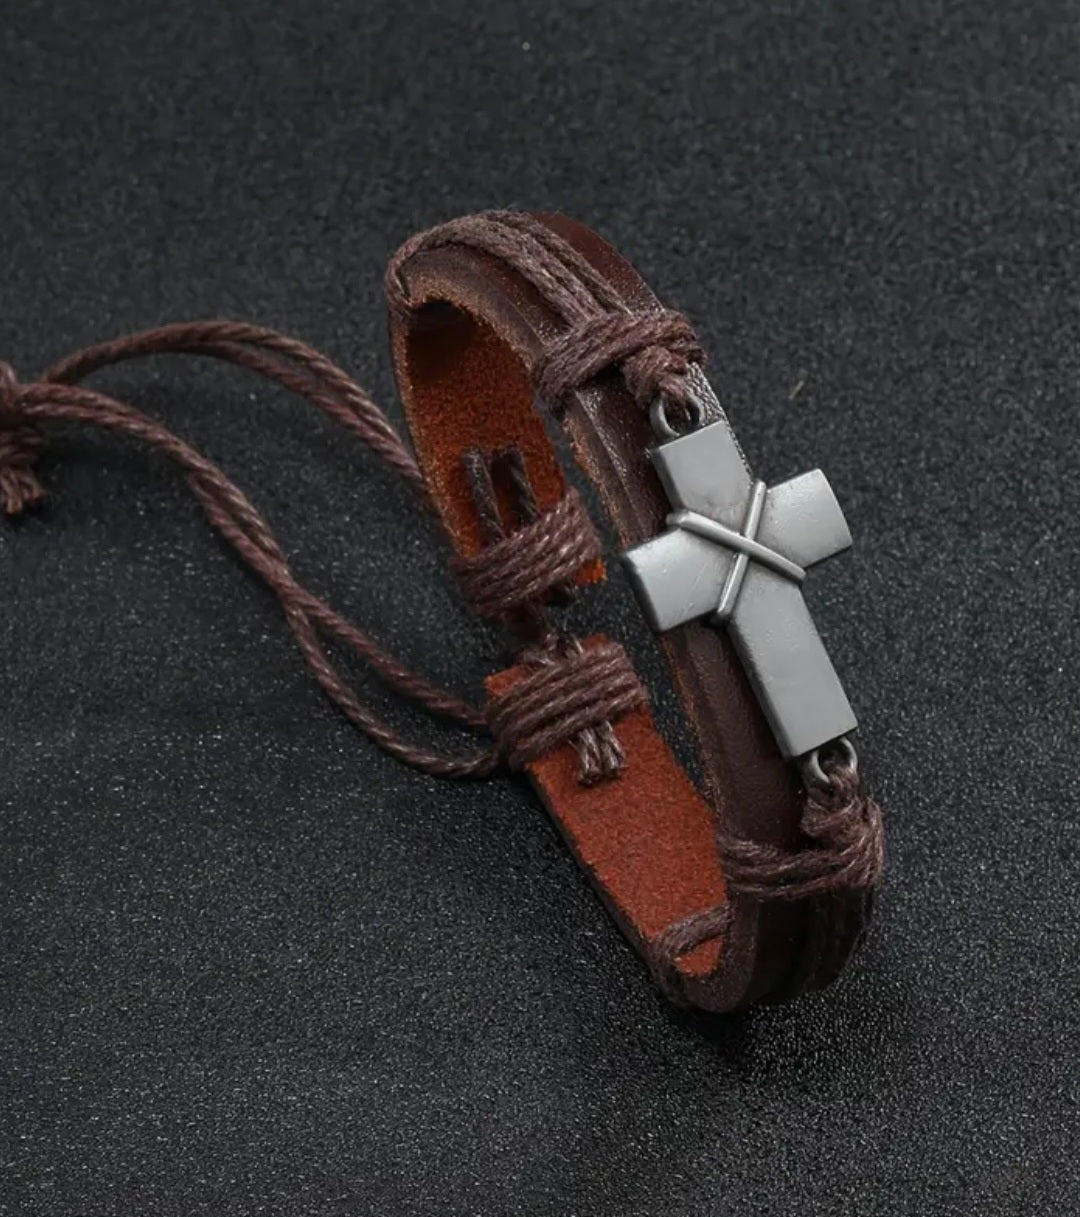 Leather cross bracelet with draw string, unisex, men's bracelet